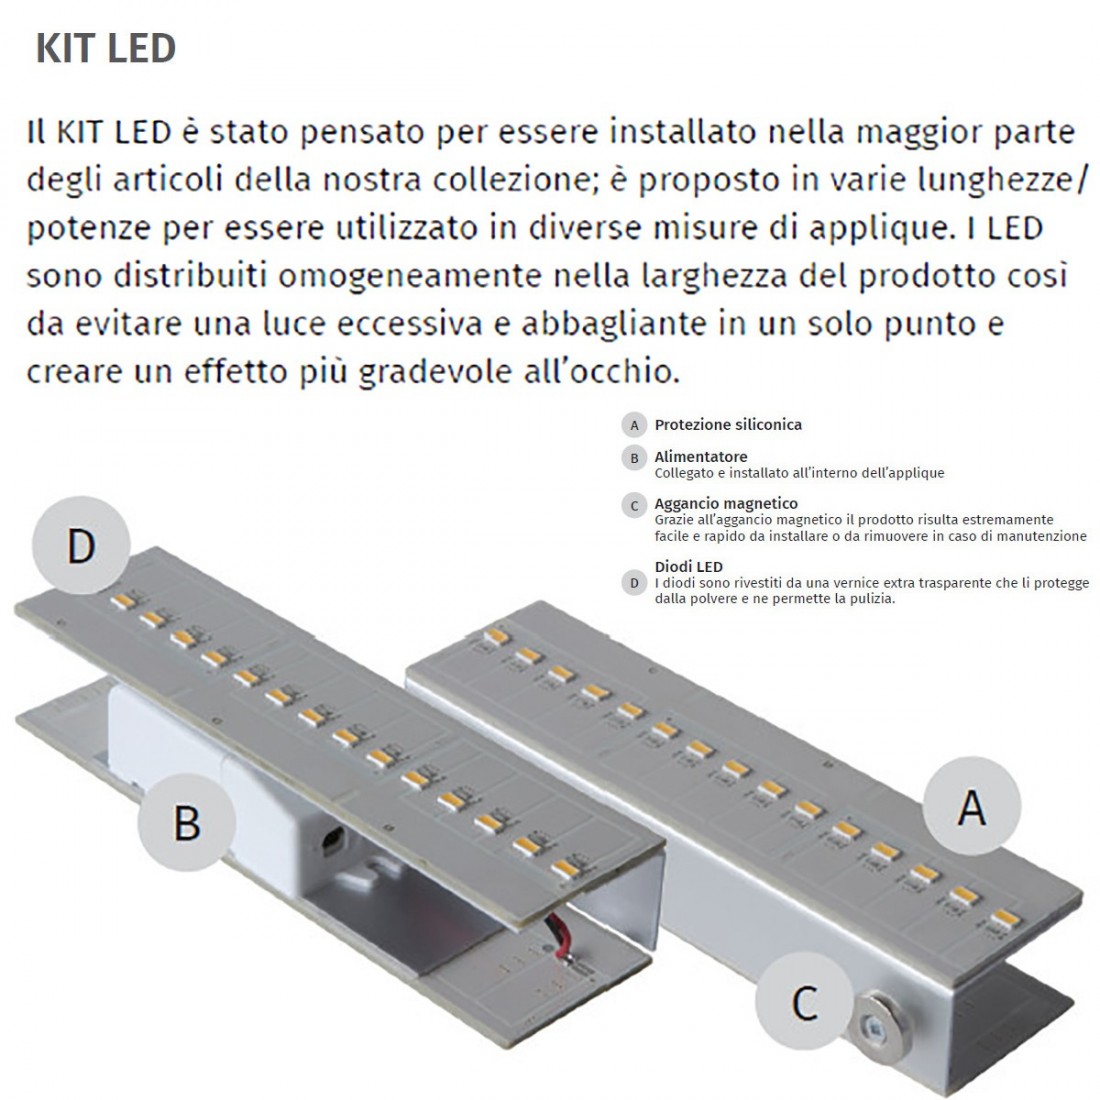 Applique gesso kit emergenza Belfiore 9010 MOKA 2516M 3045 LED